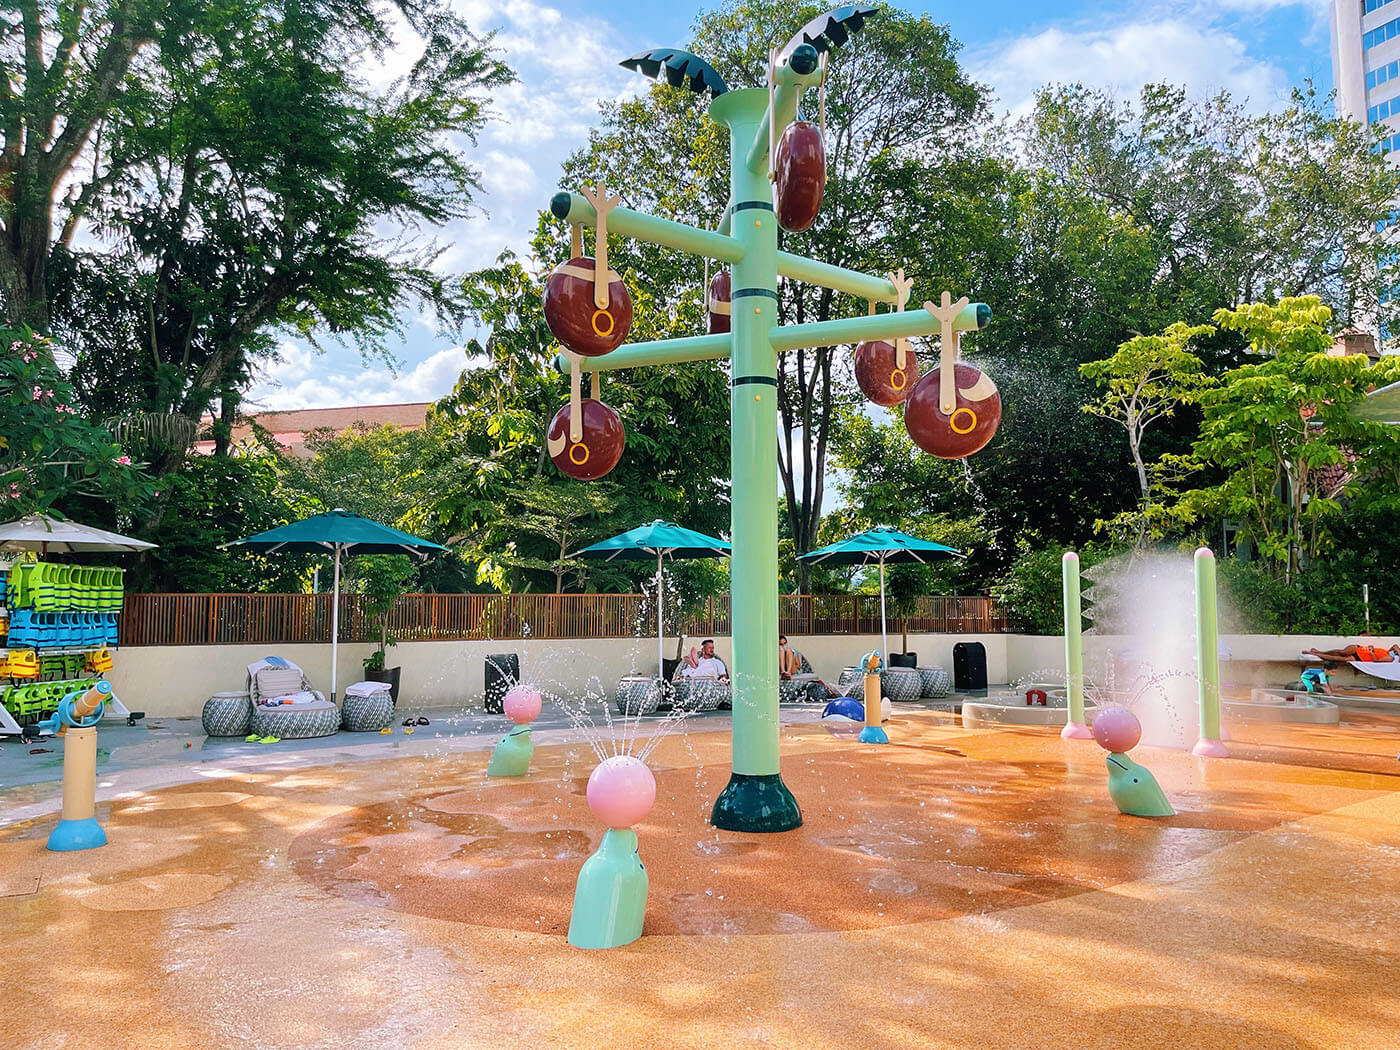 Splash Zone at Shangri-la Orchard